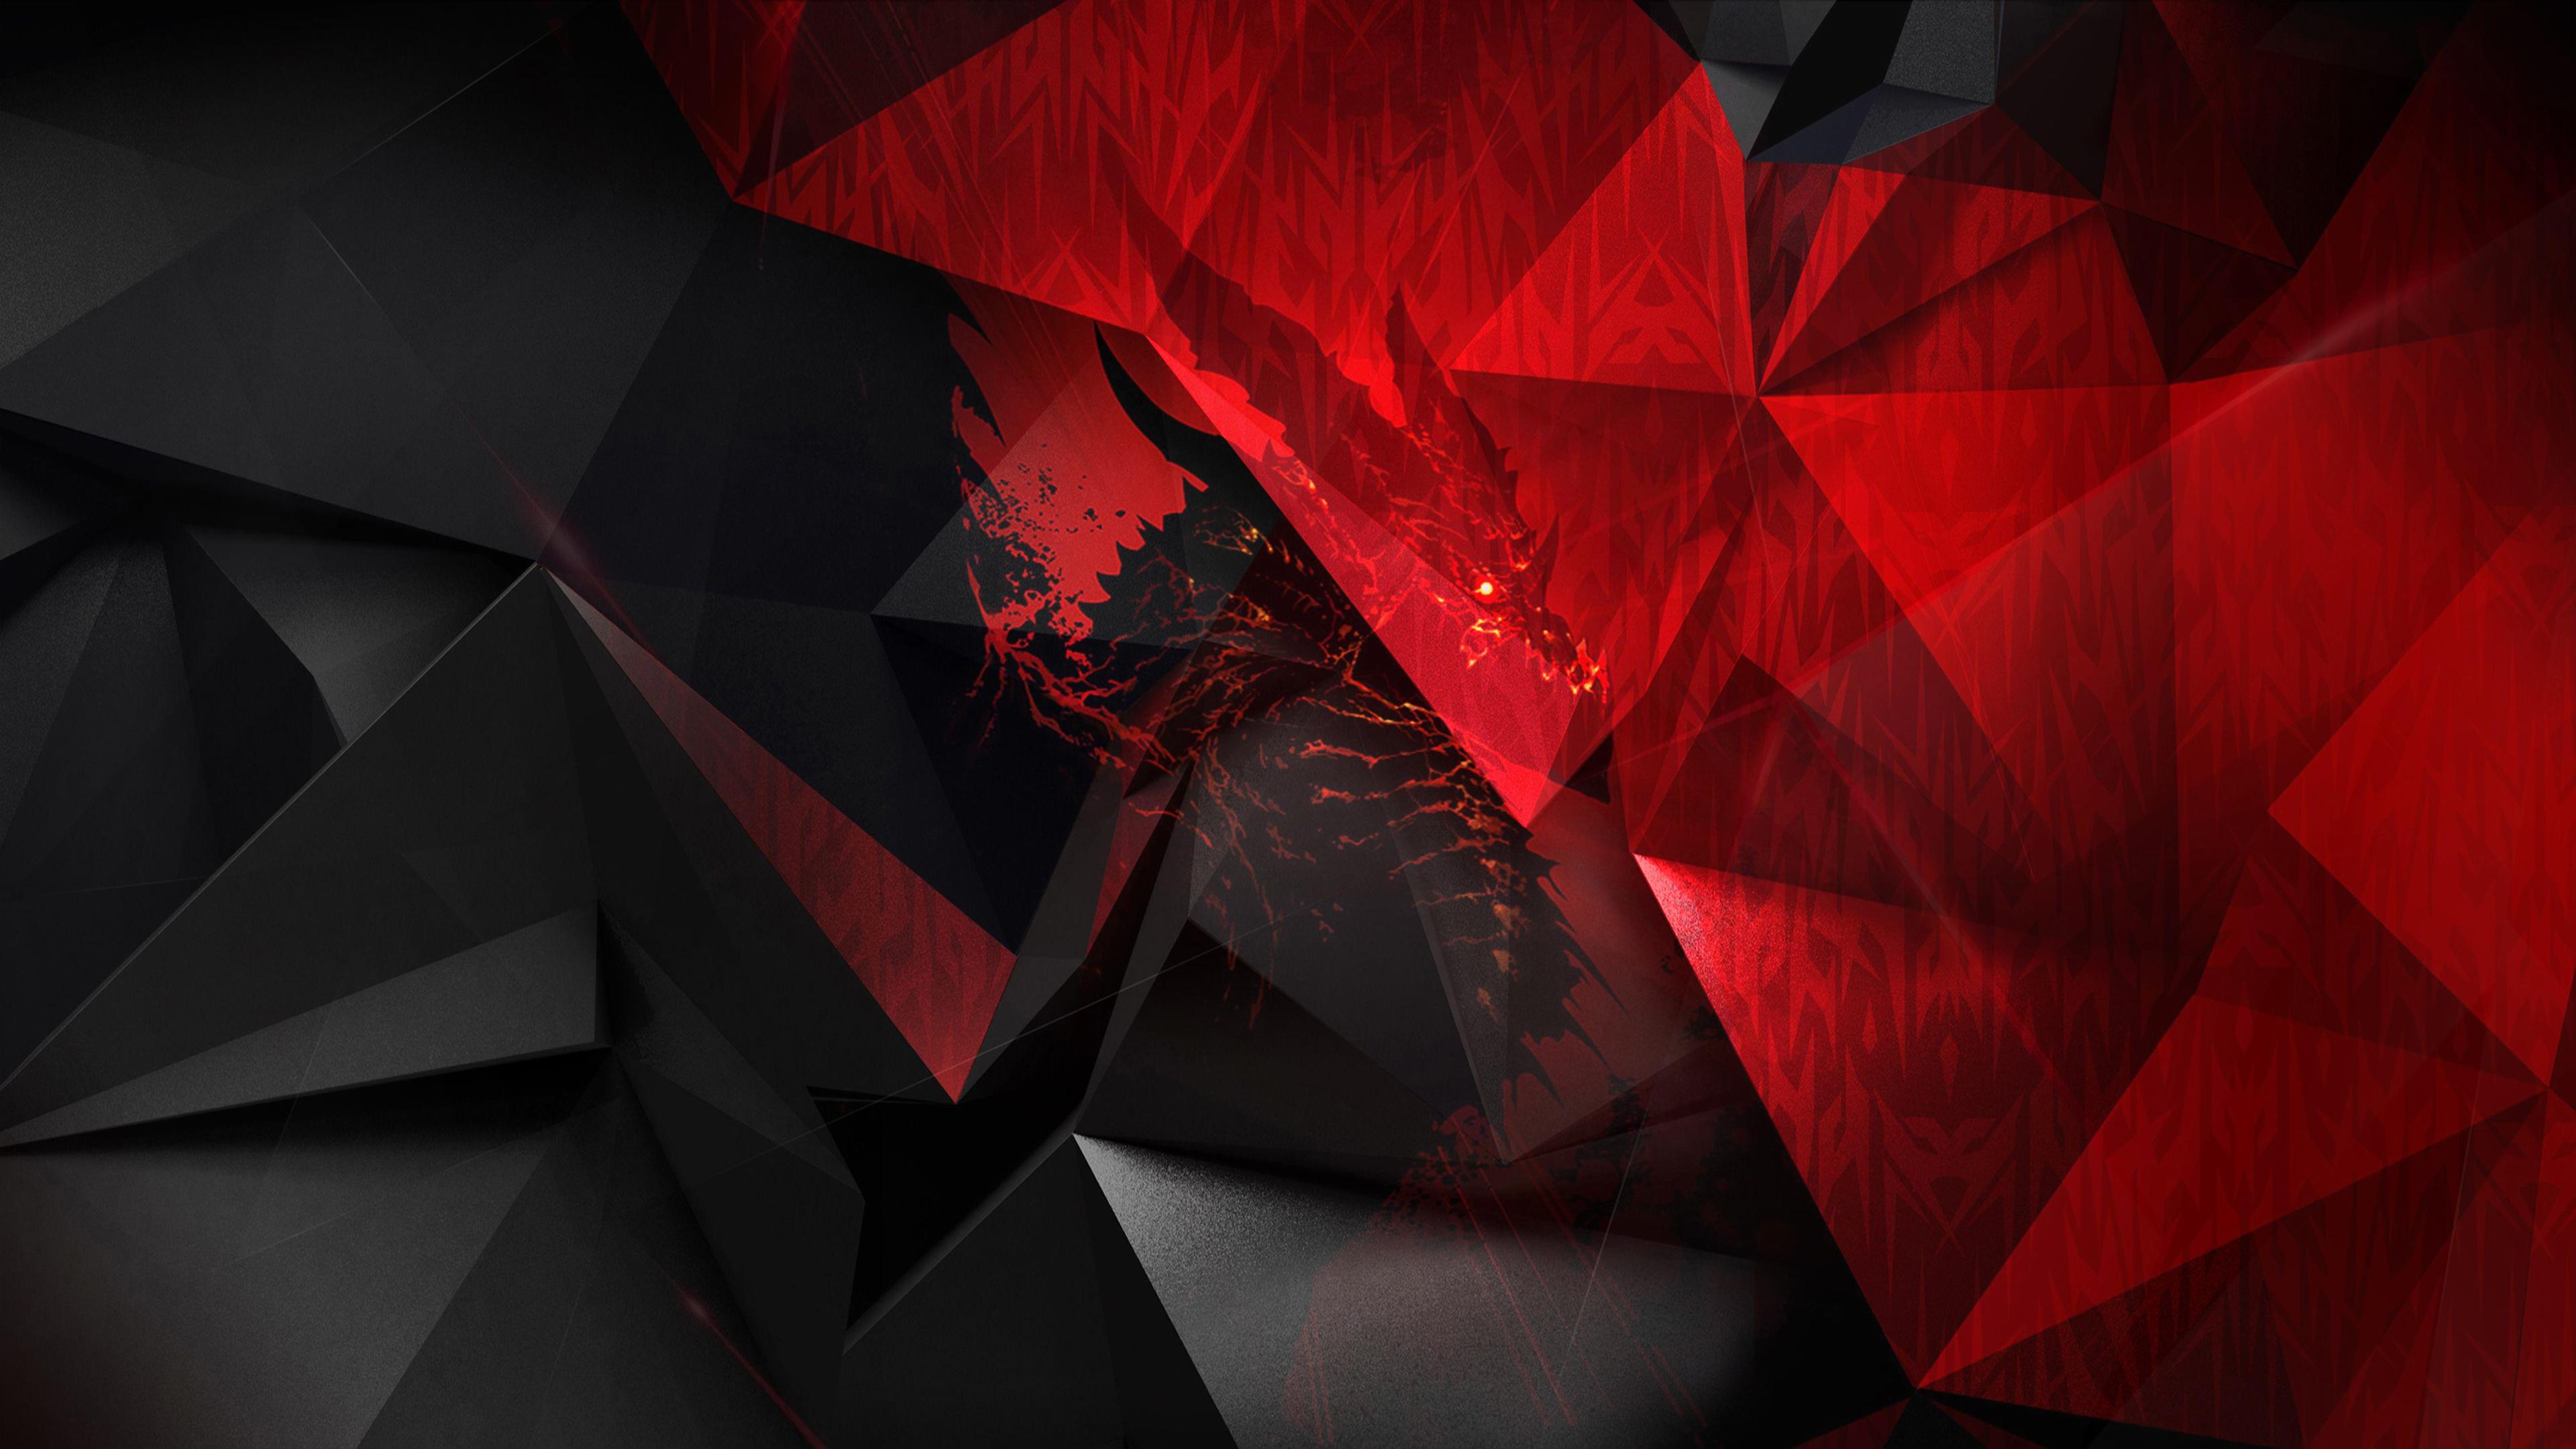 acer predator wallpaper,rot,schwarz,licht,dreieck,design